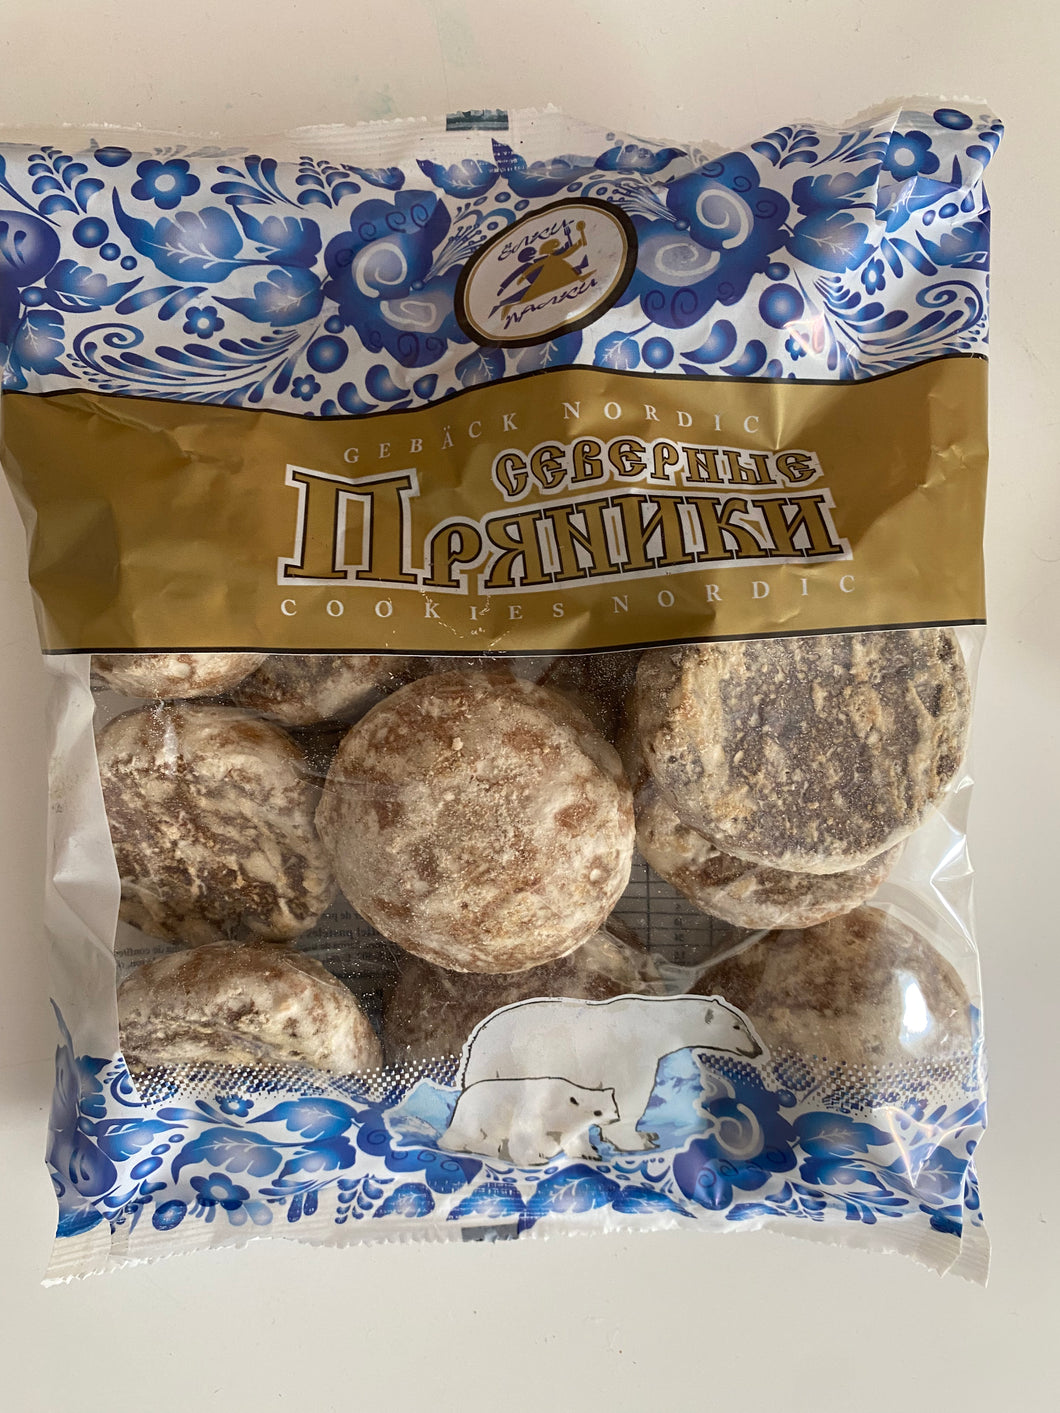 Yolki Palki Sojus NORDIC cookies gingerbread Pryaniki 400g